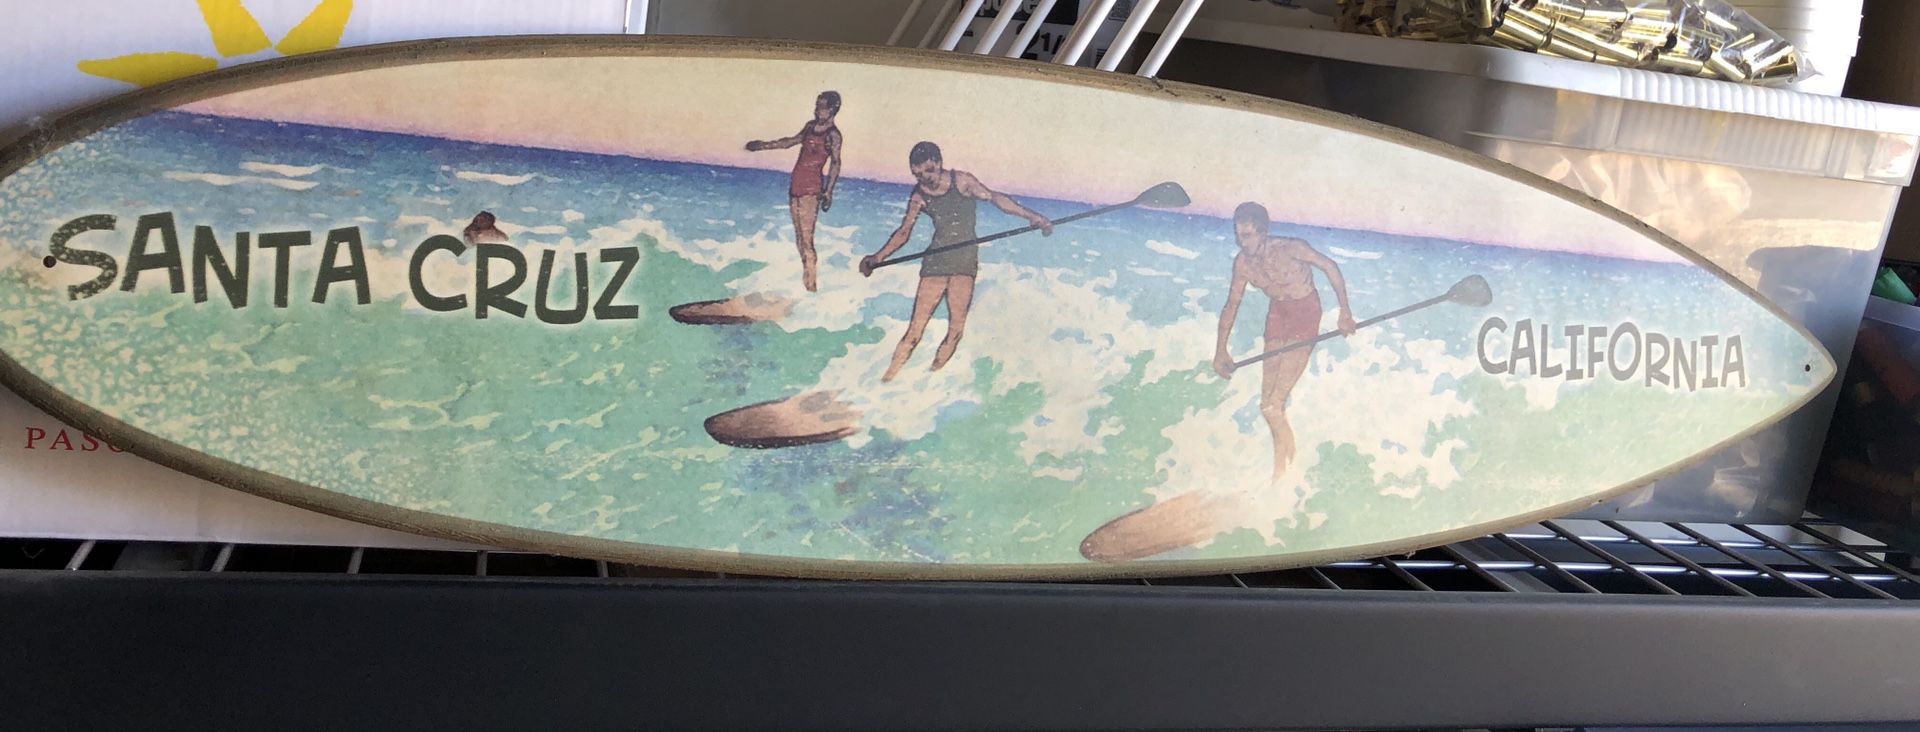 Decorative surfboard, Santa Cruz